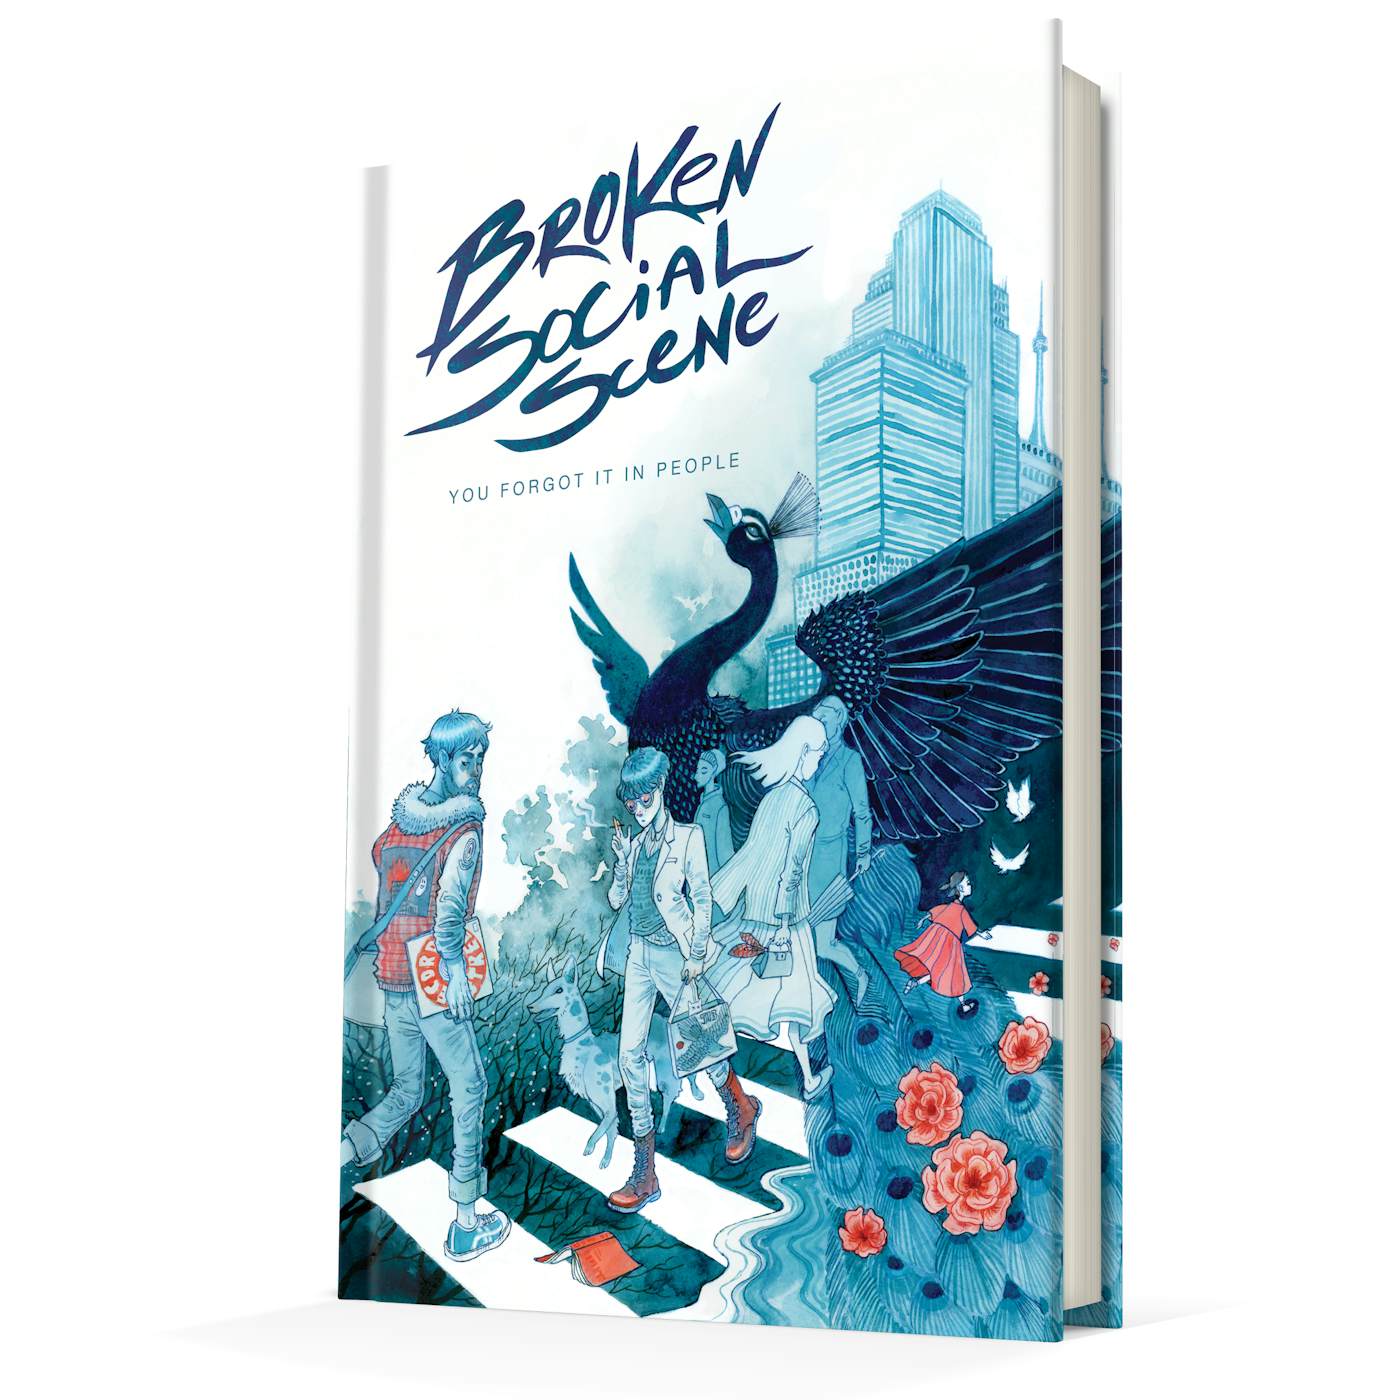 Broken Social Scene: You Forgot It in People, The Graphic Novel (Hardcover)